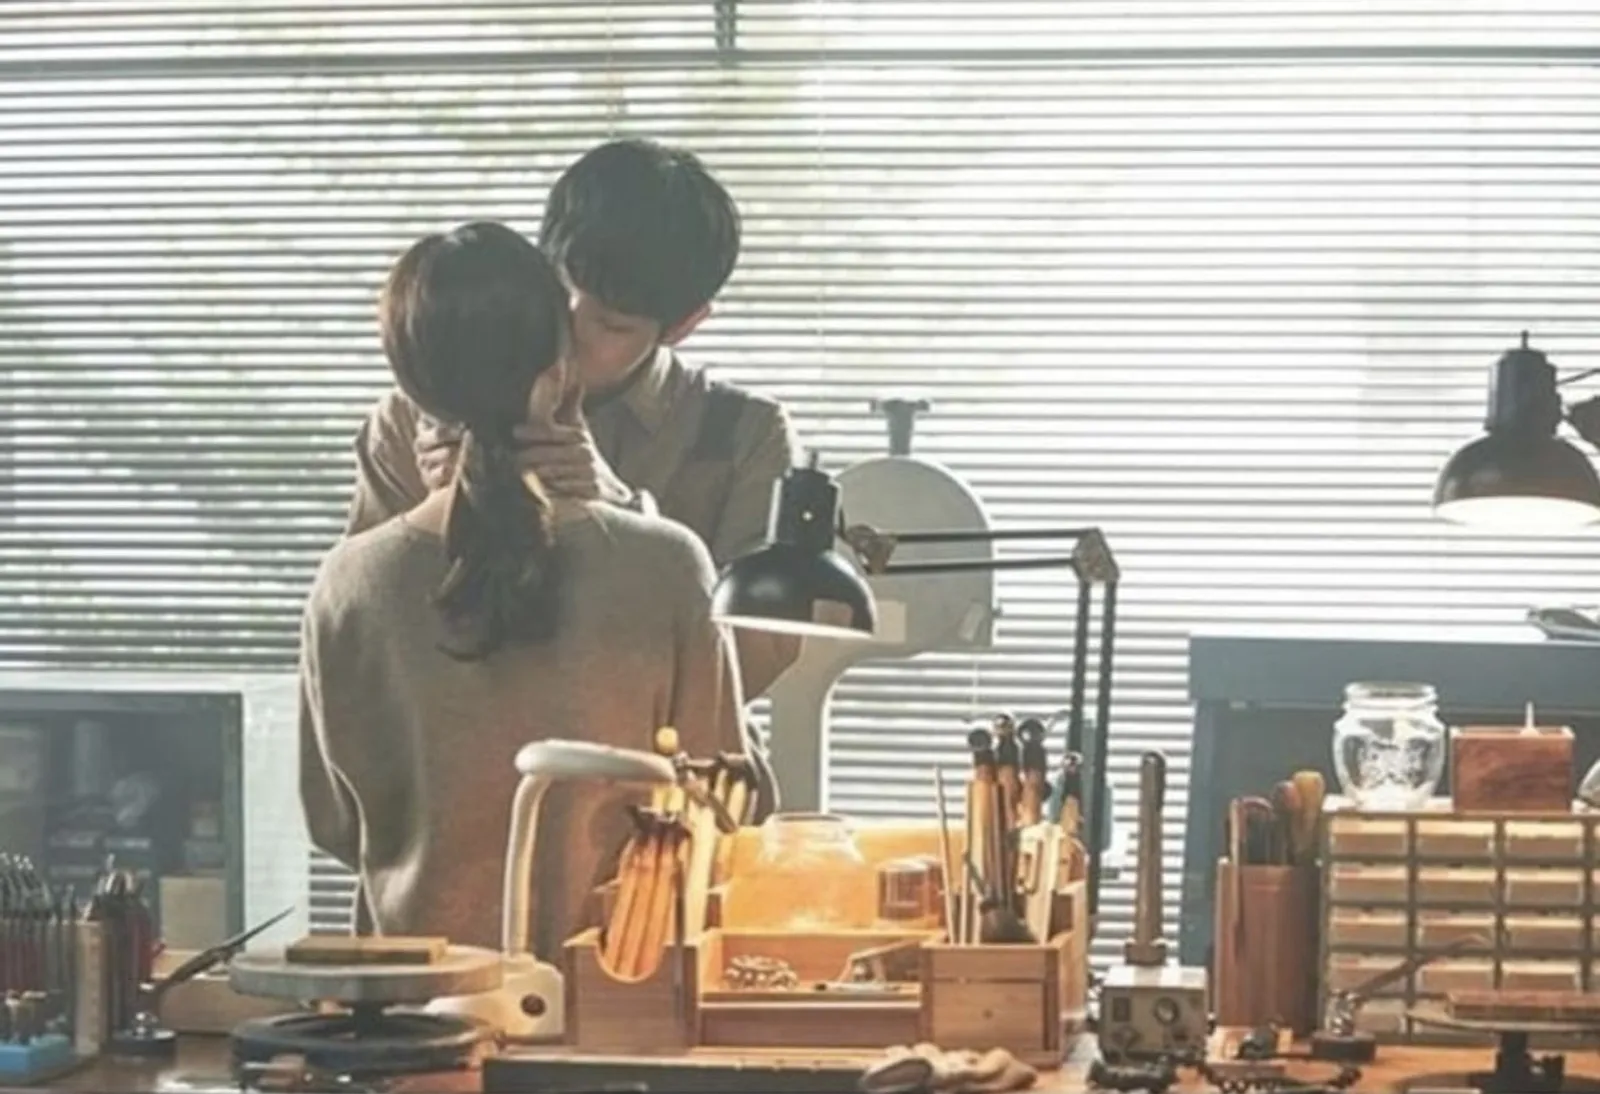 Bikin Kesemsem! 10 Potret Mesra Lee Joon Gi dan Moon Chae Won di Drama